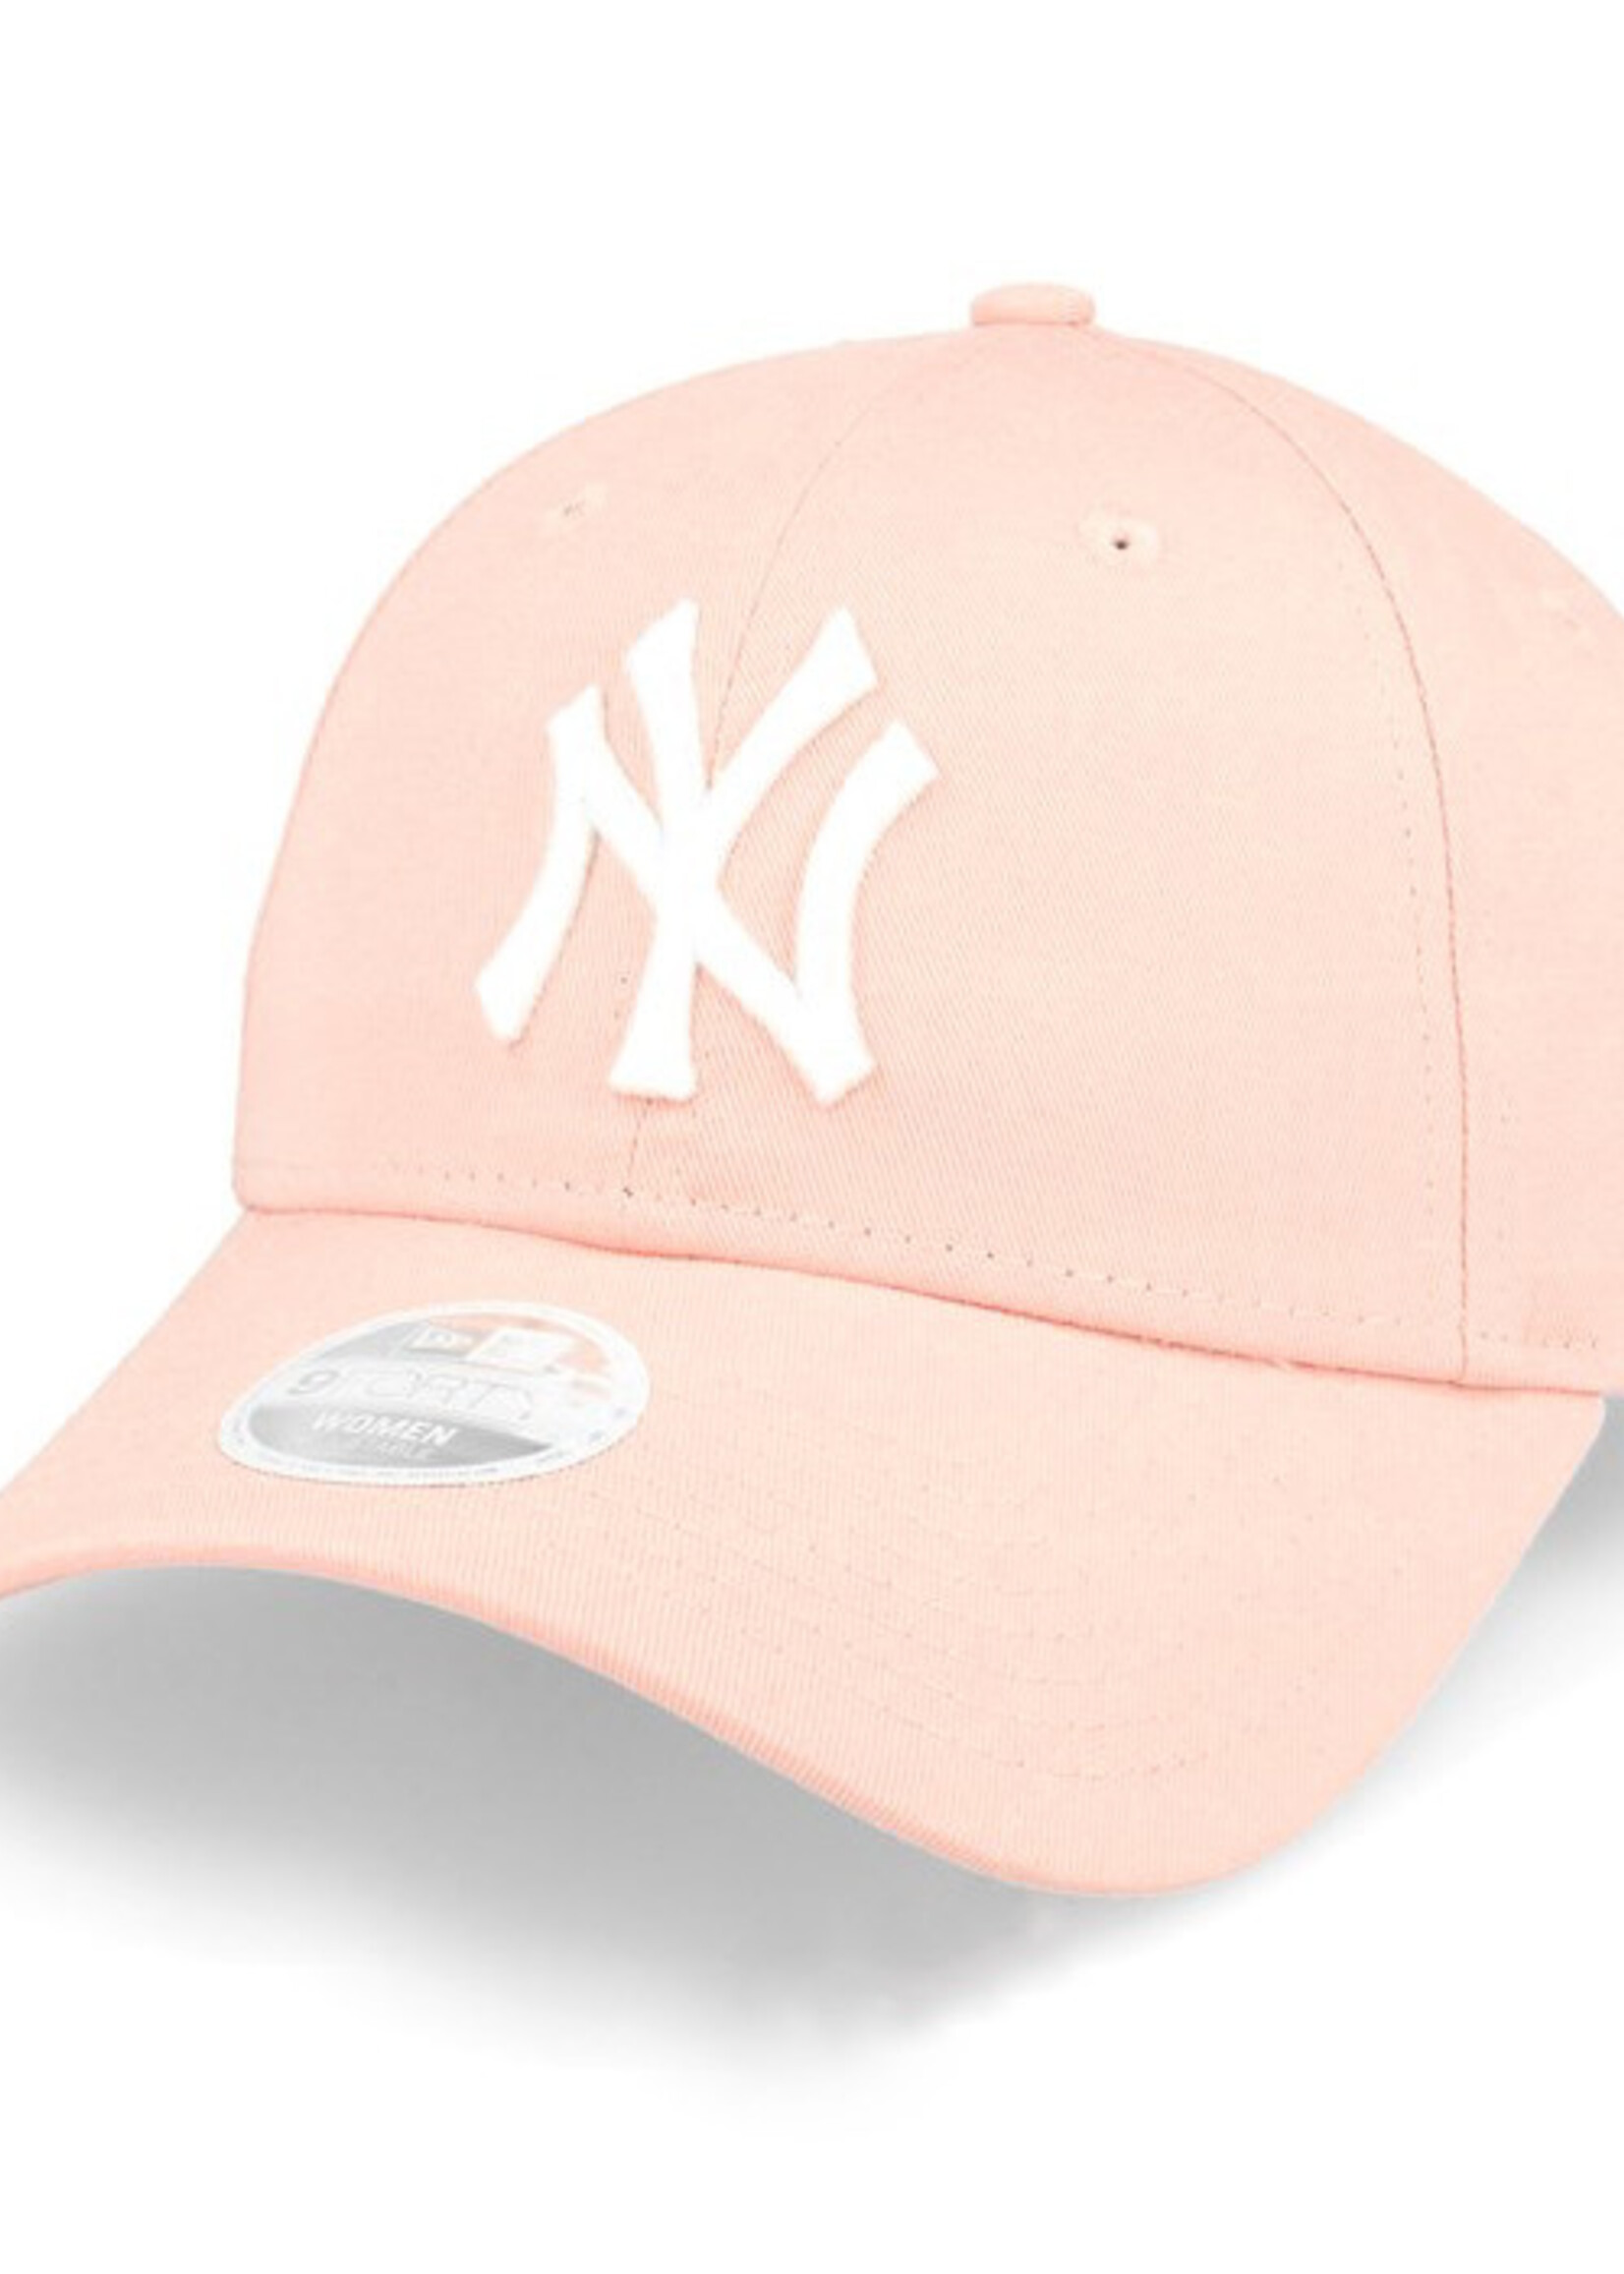 New Era New Era New York Yankees MLB 9Forty Cap Femme Rosé